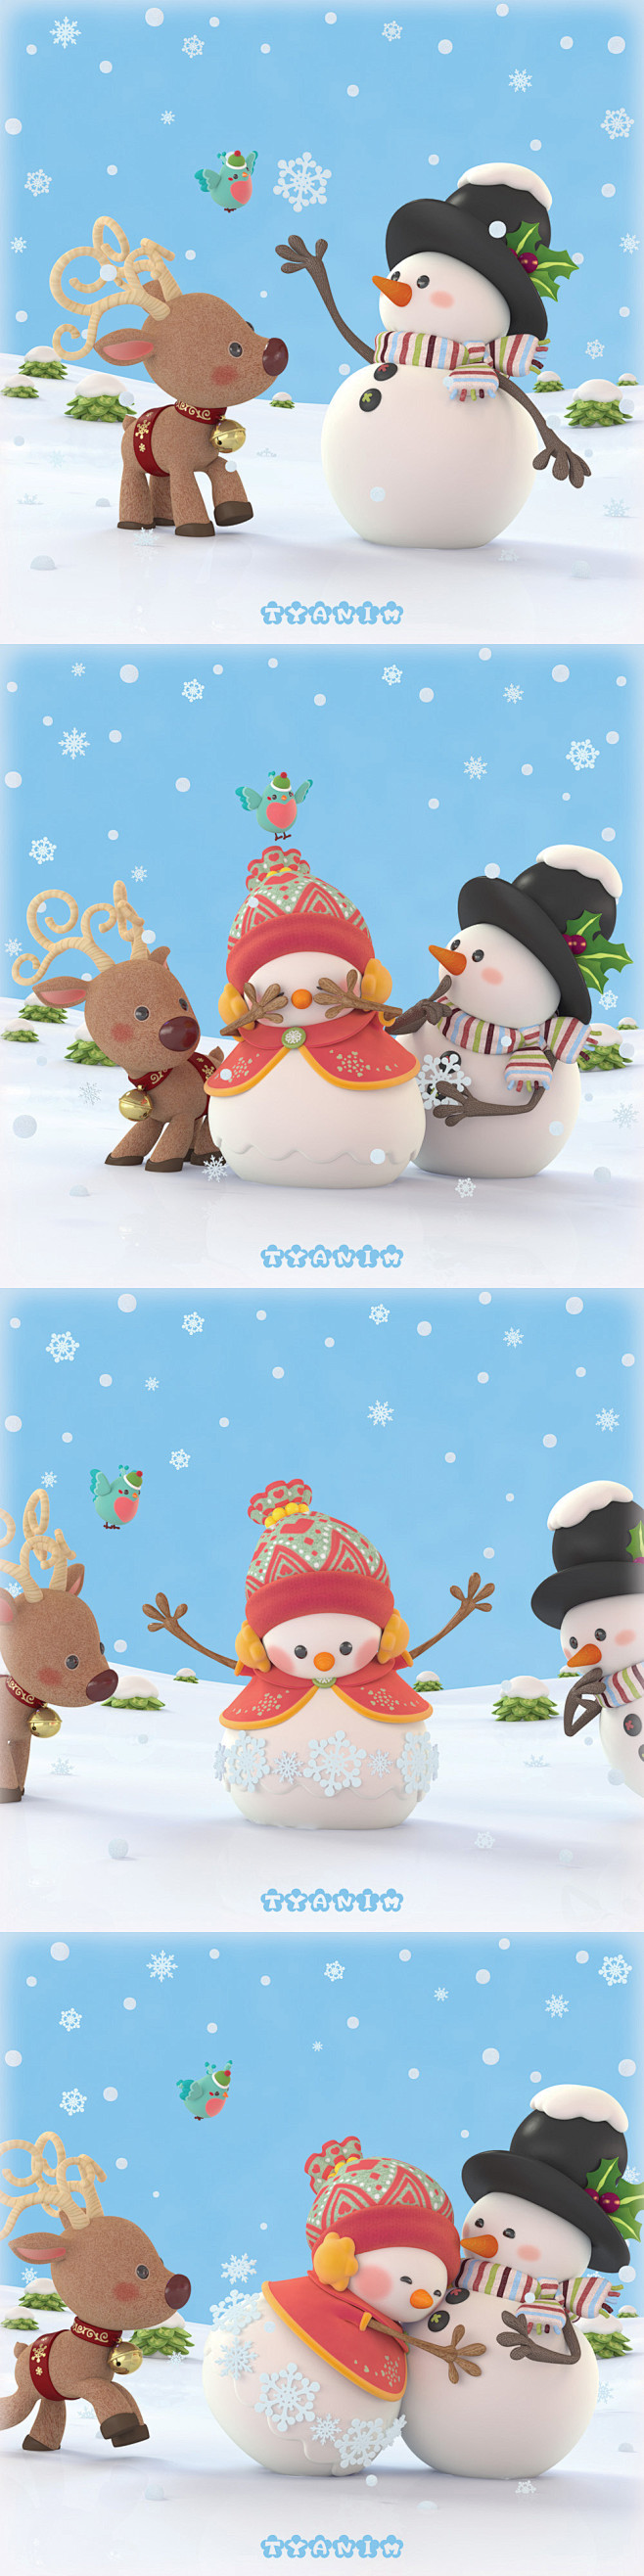 Snowman by yinxuan